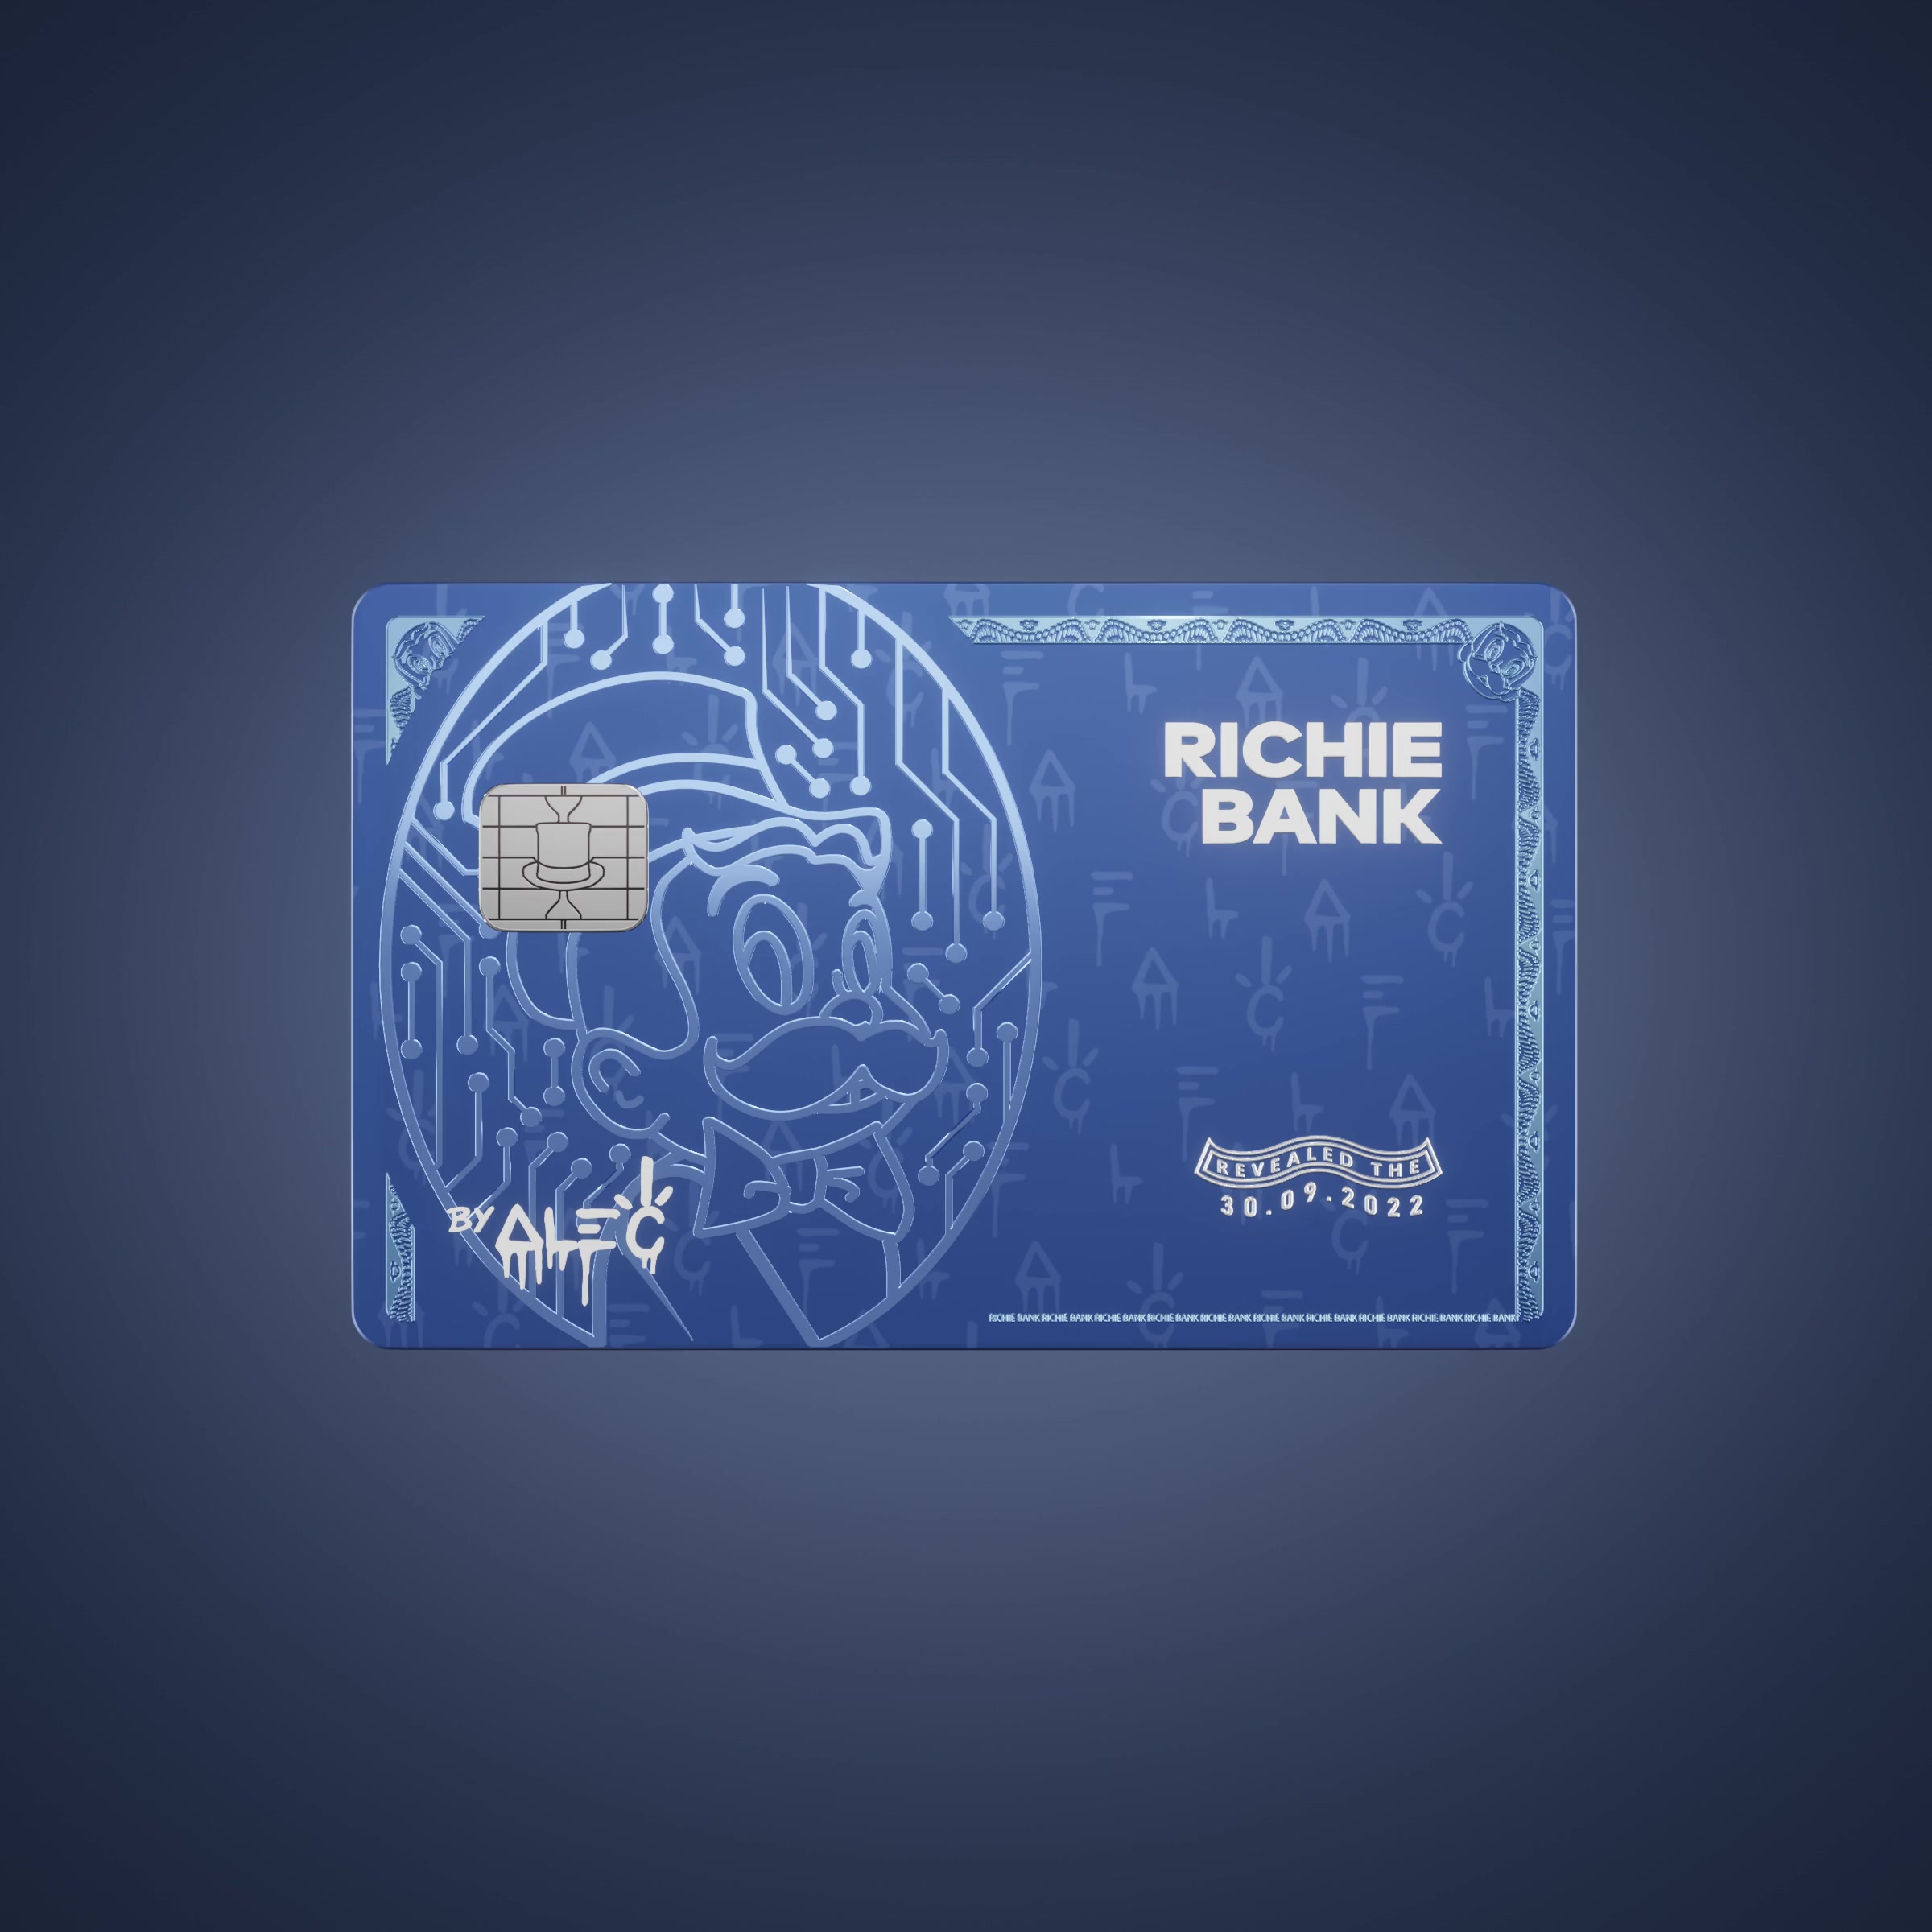 Richie Bank Card #873